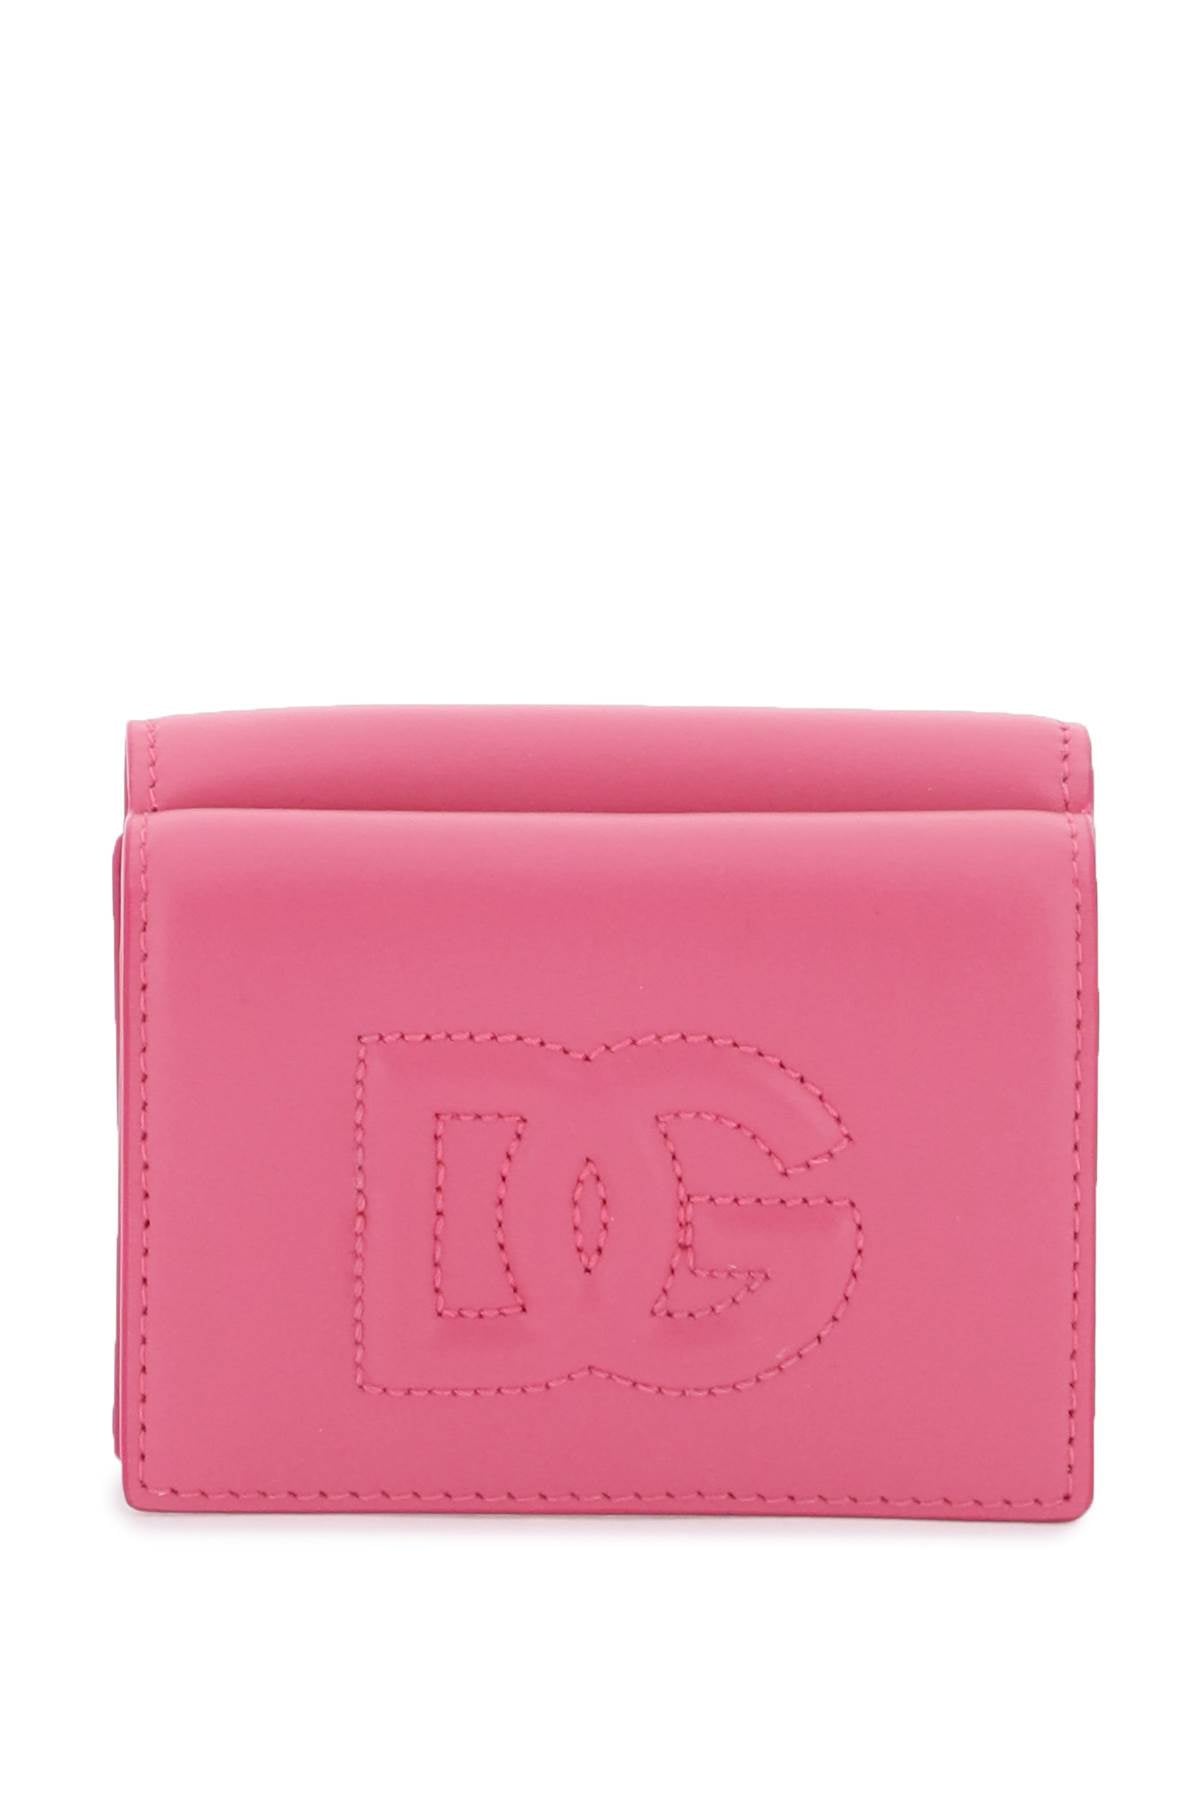 Dolce & Gabbana Dolce & gabbana dg logo french flap wallet